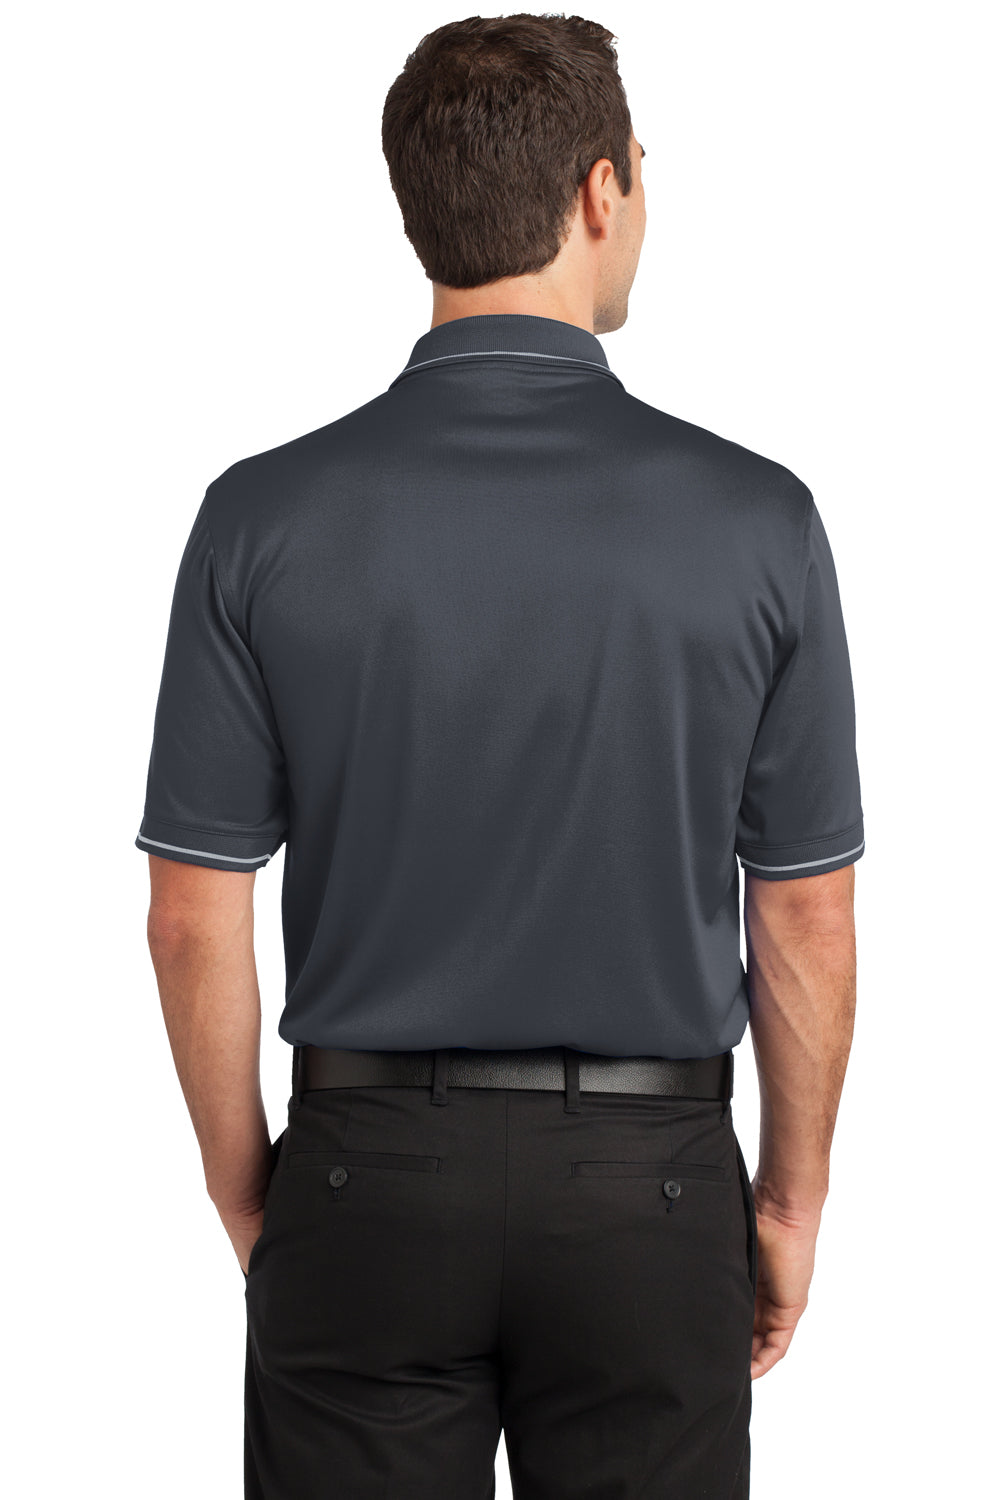 CornerStone CS415 Mens Select Moisture Wicking Short Sleeve Polo Shirt w/ Pocket Charcoal Grey Back